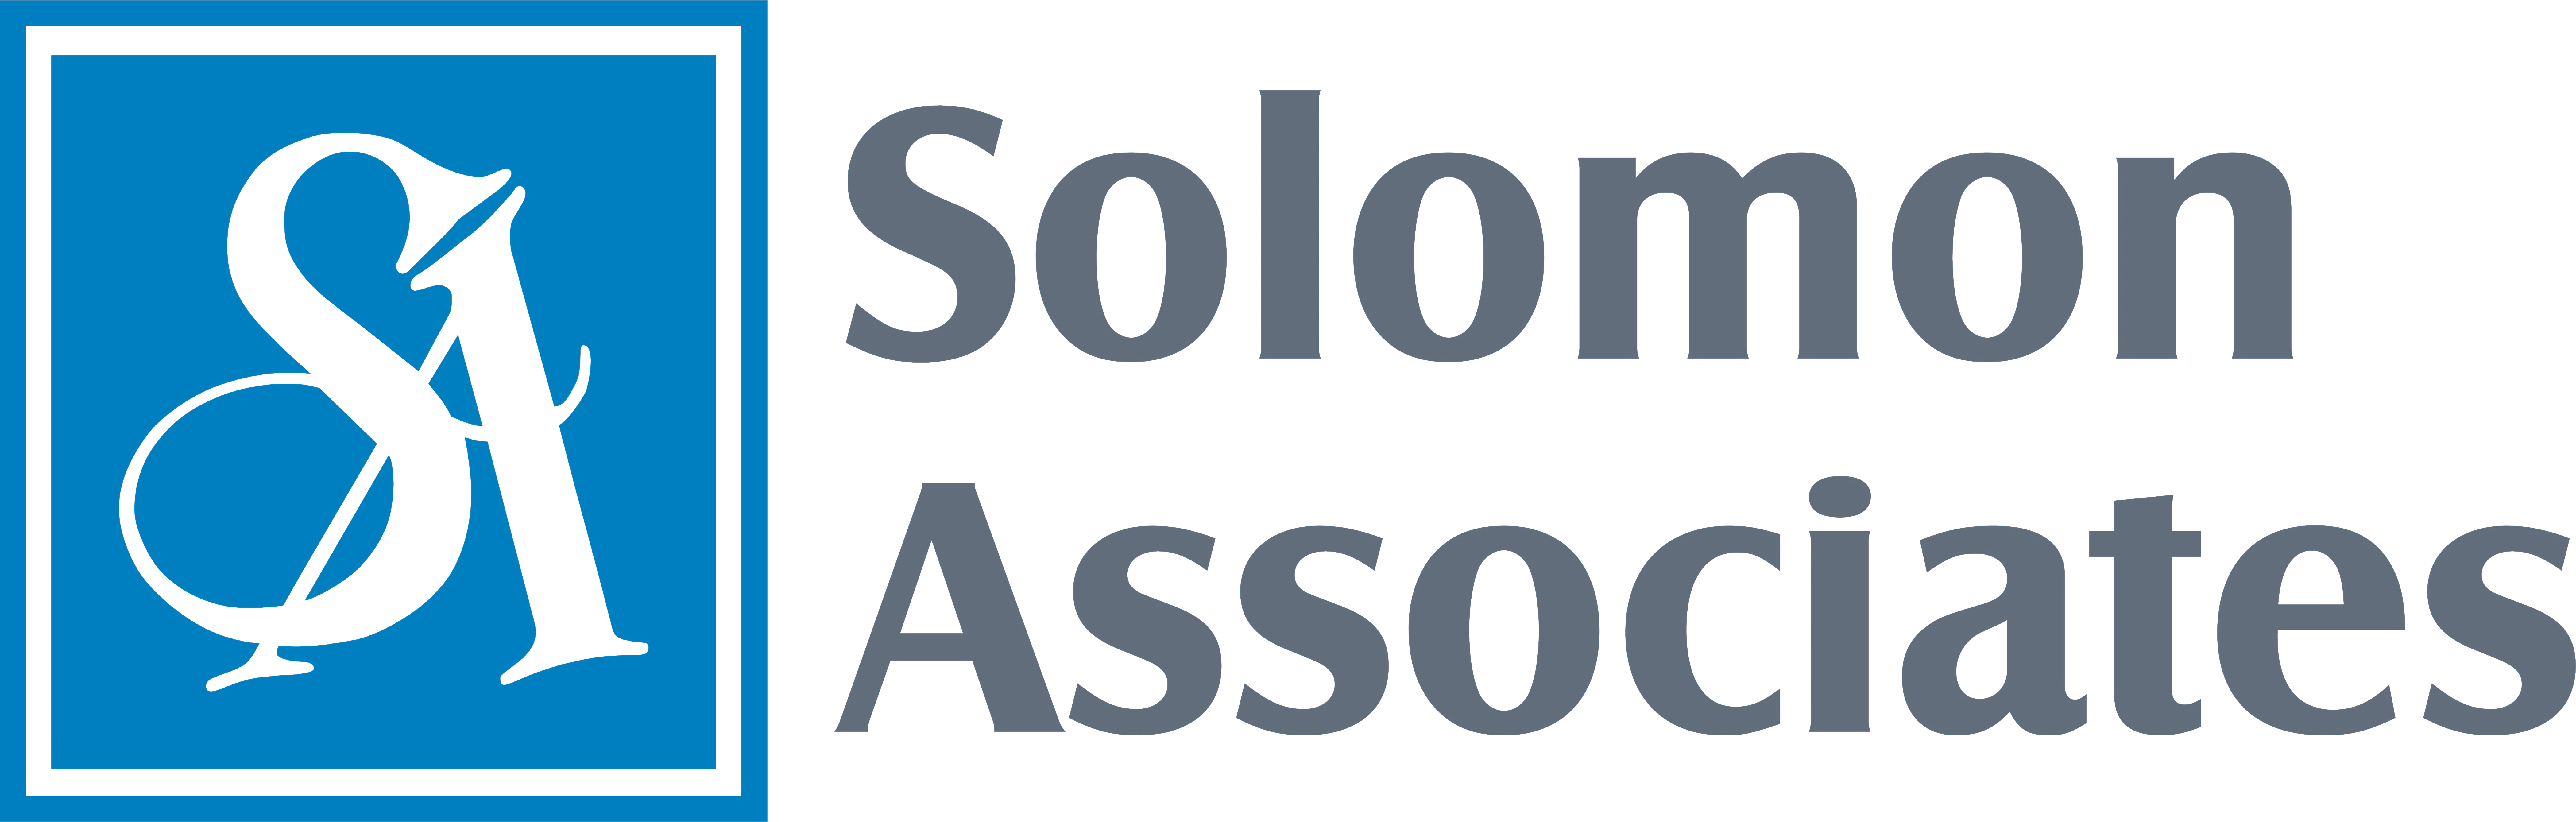 PinnacleART and Solomon Associates Partnership